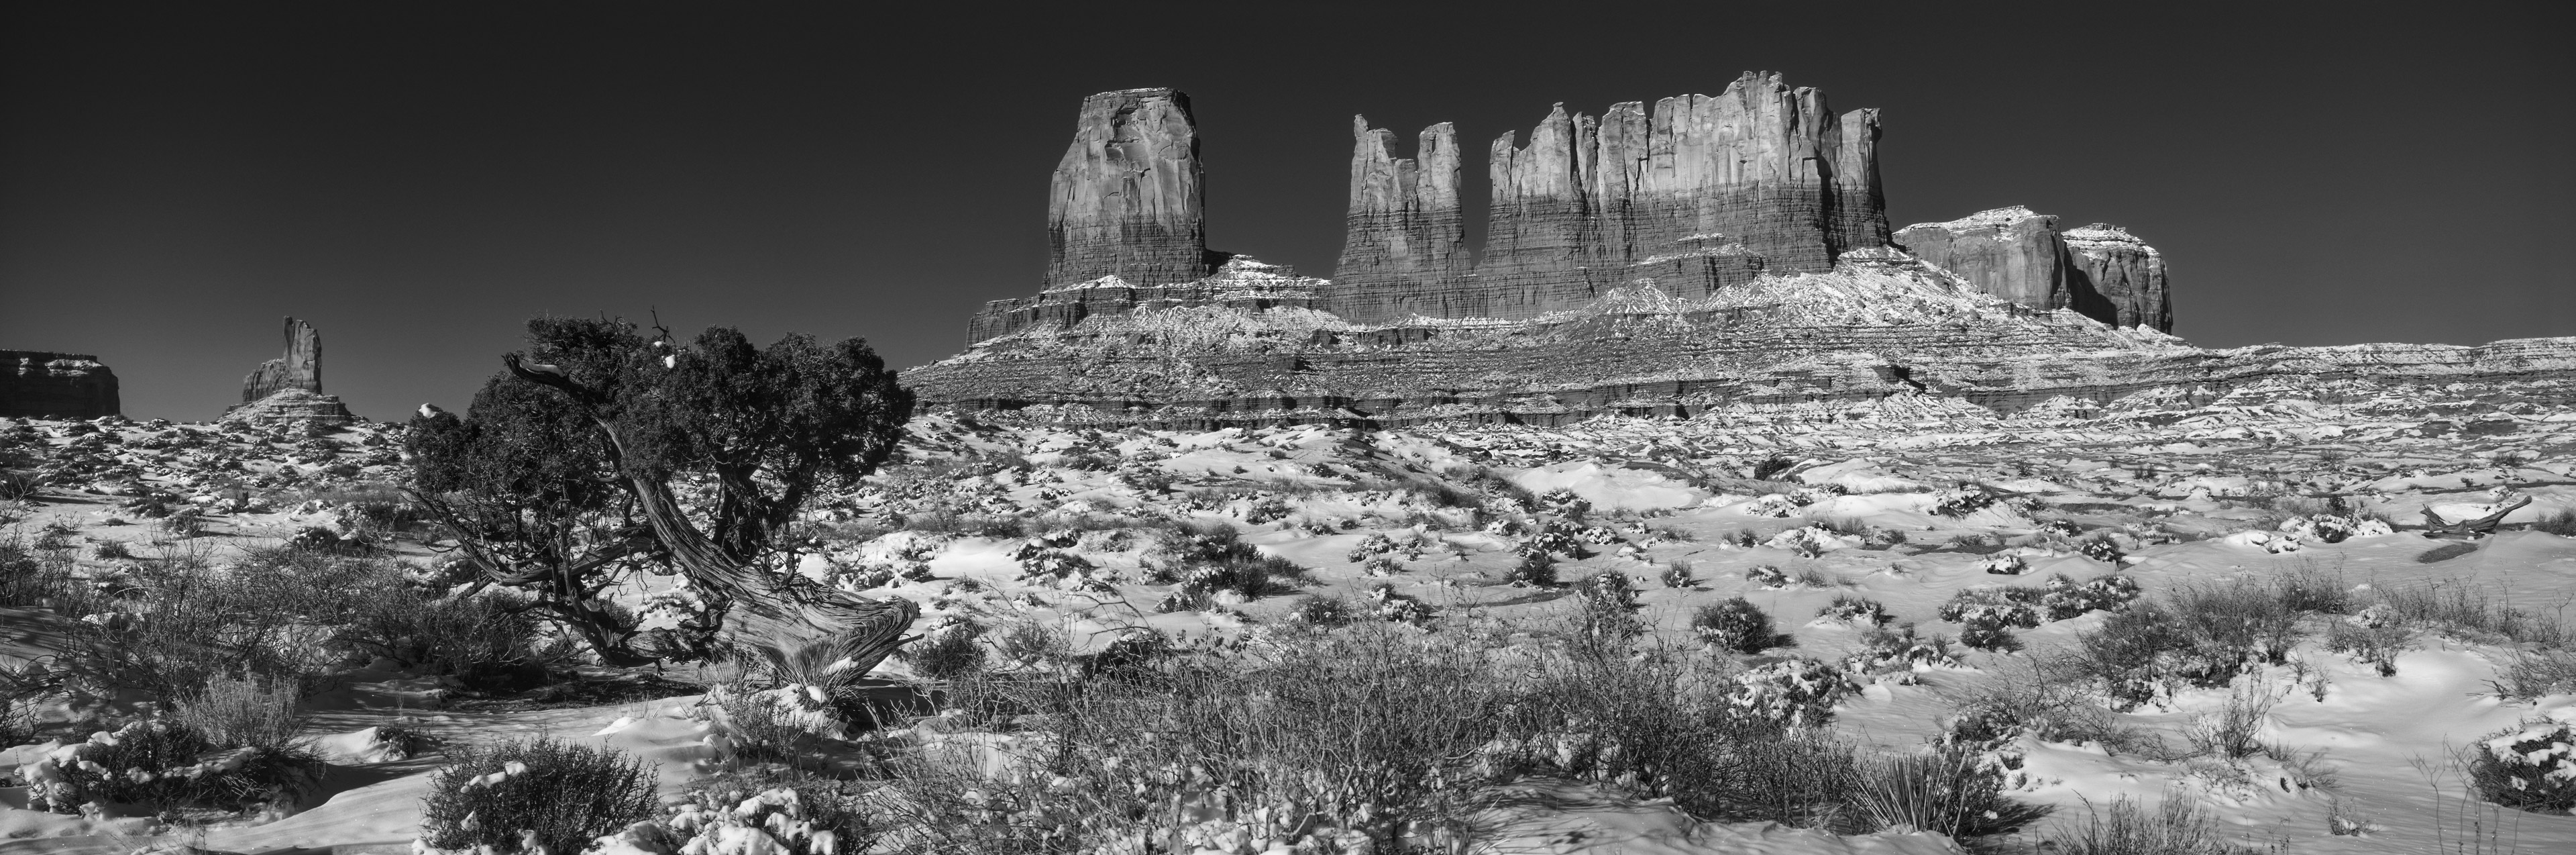 Monument Valley Navajo Tribal Park, Utah (43592-alt-3T)